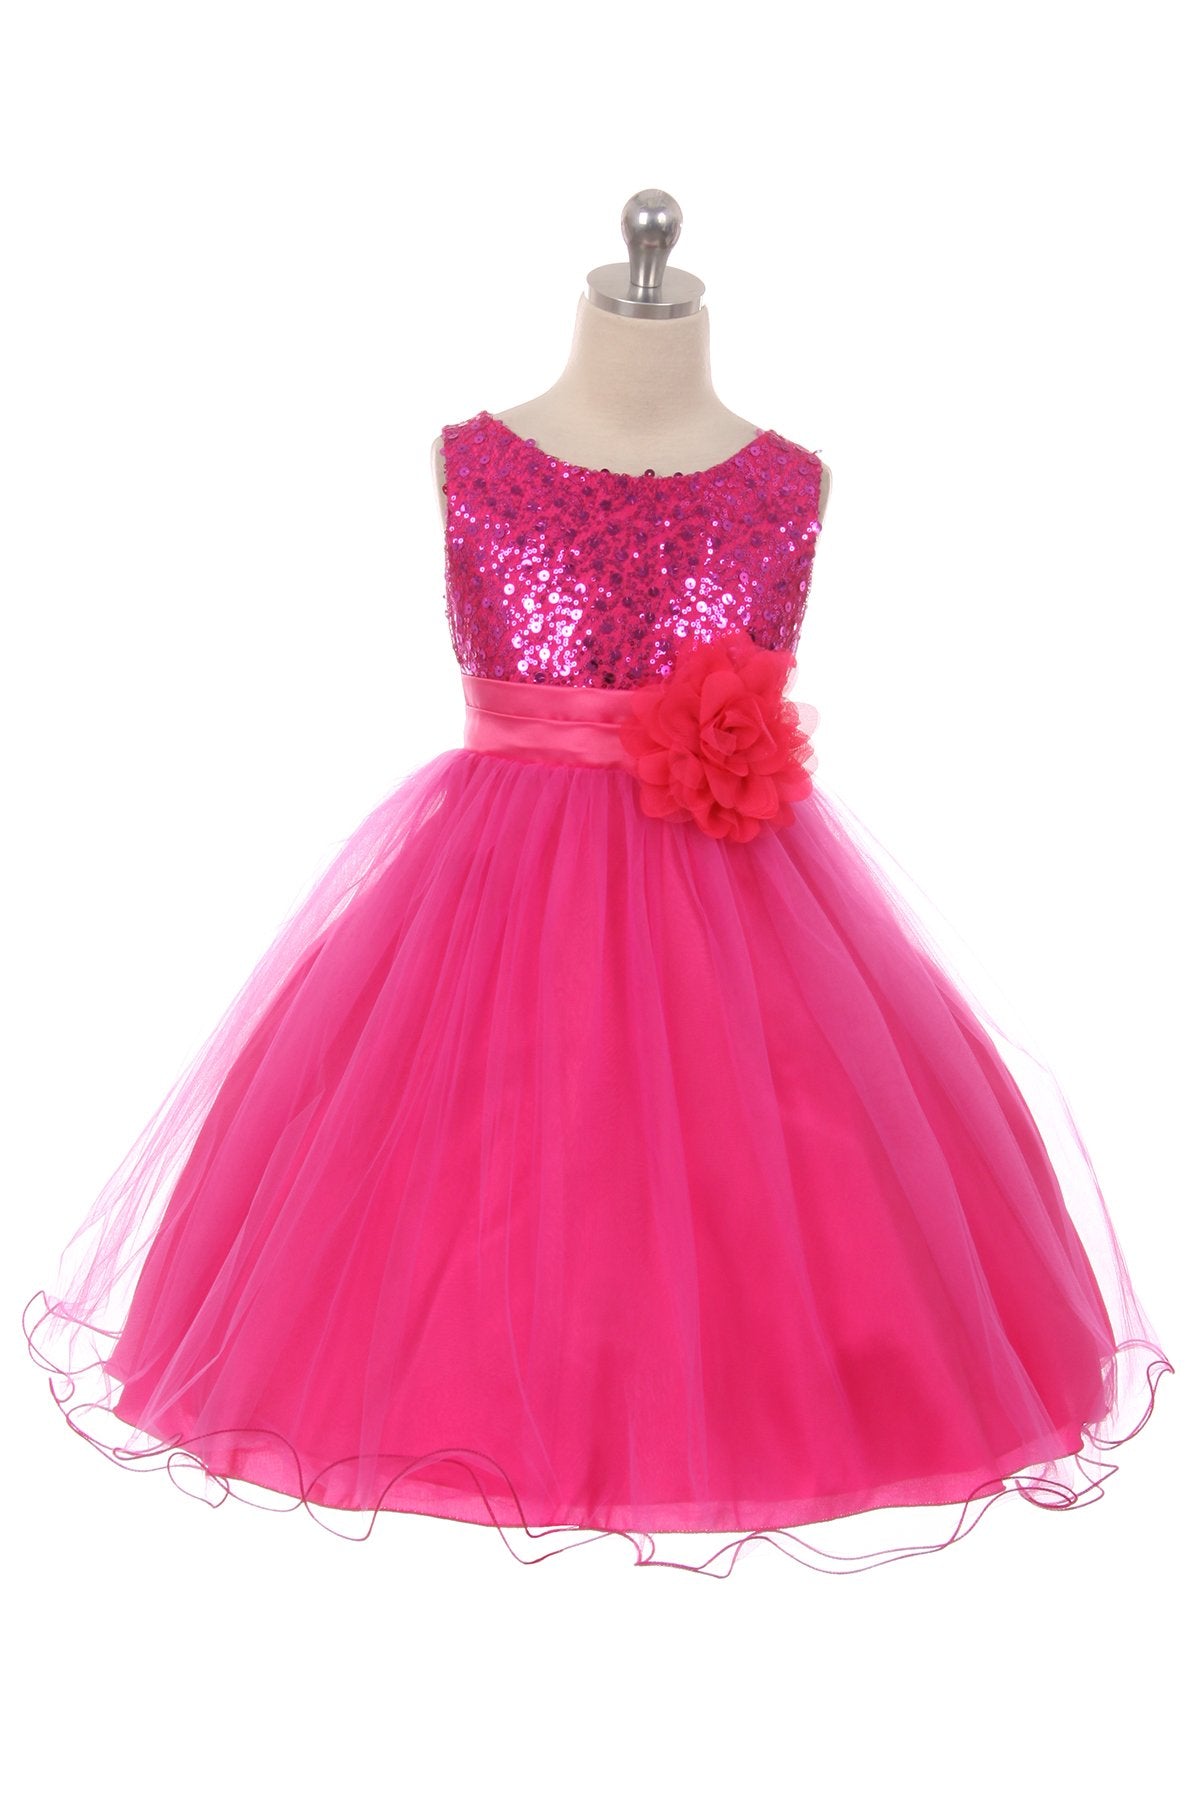 Dress - Sequin Girl Party Dress